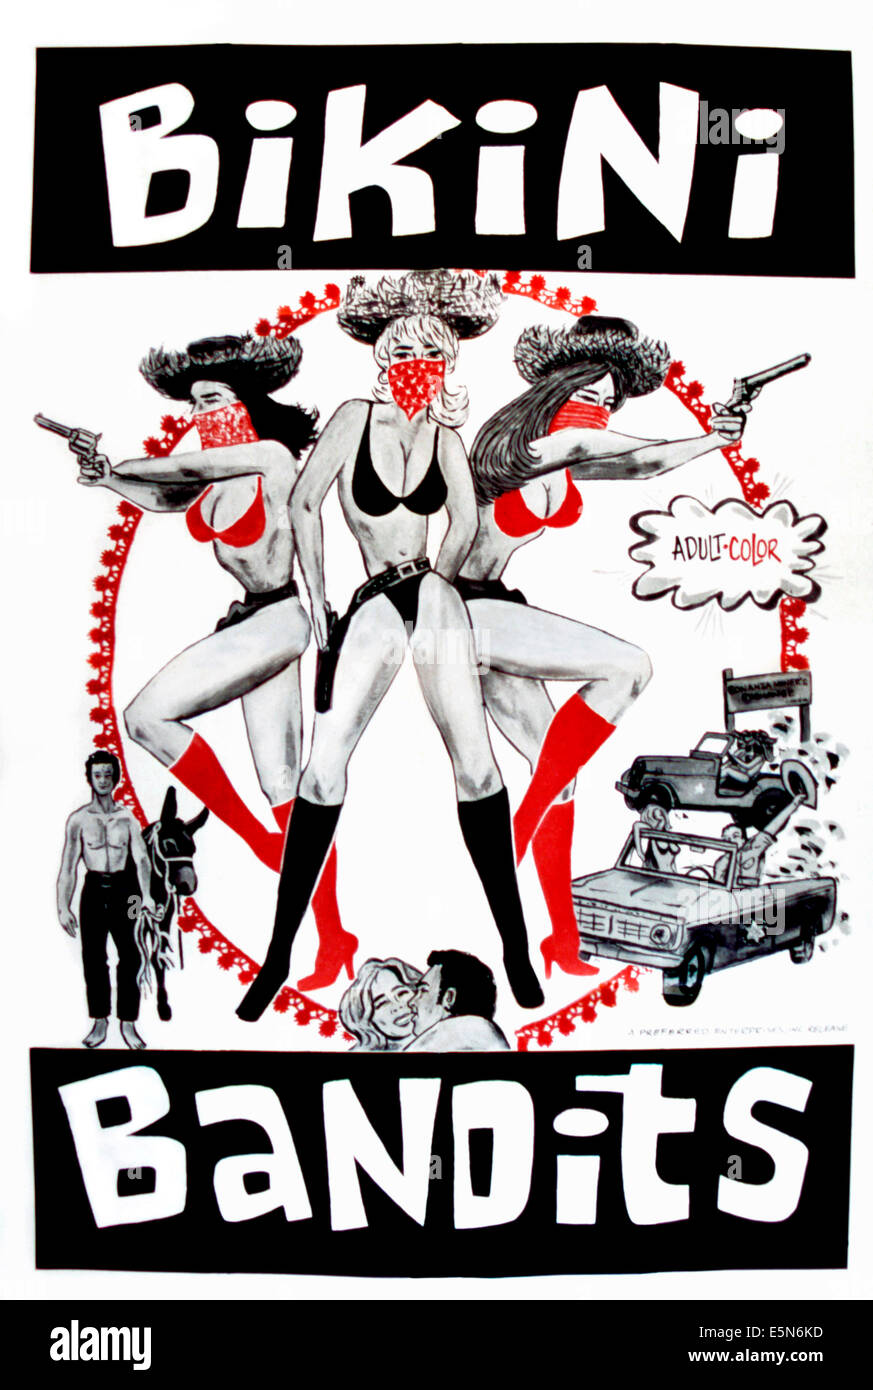 BIKINI BANDITS, Poster Art, 2002 Stock Photo - Alamy